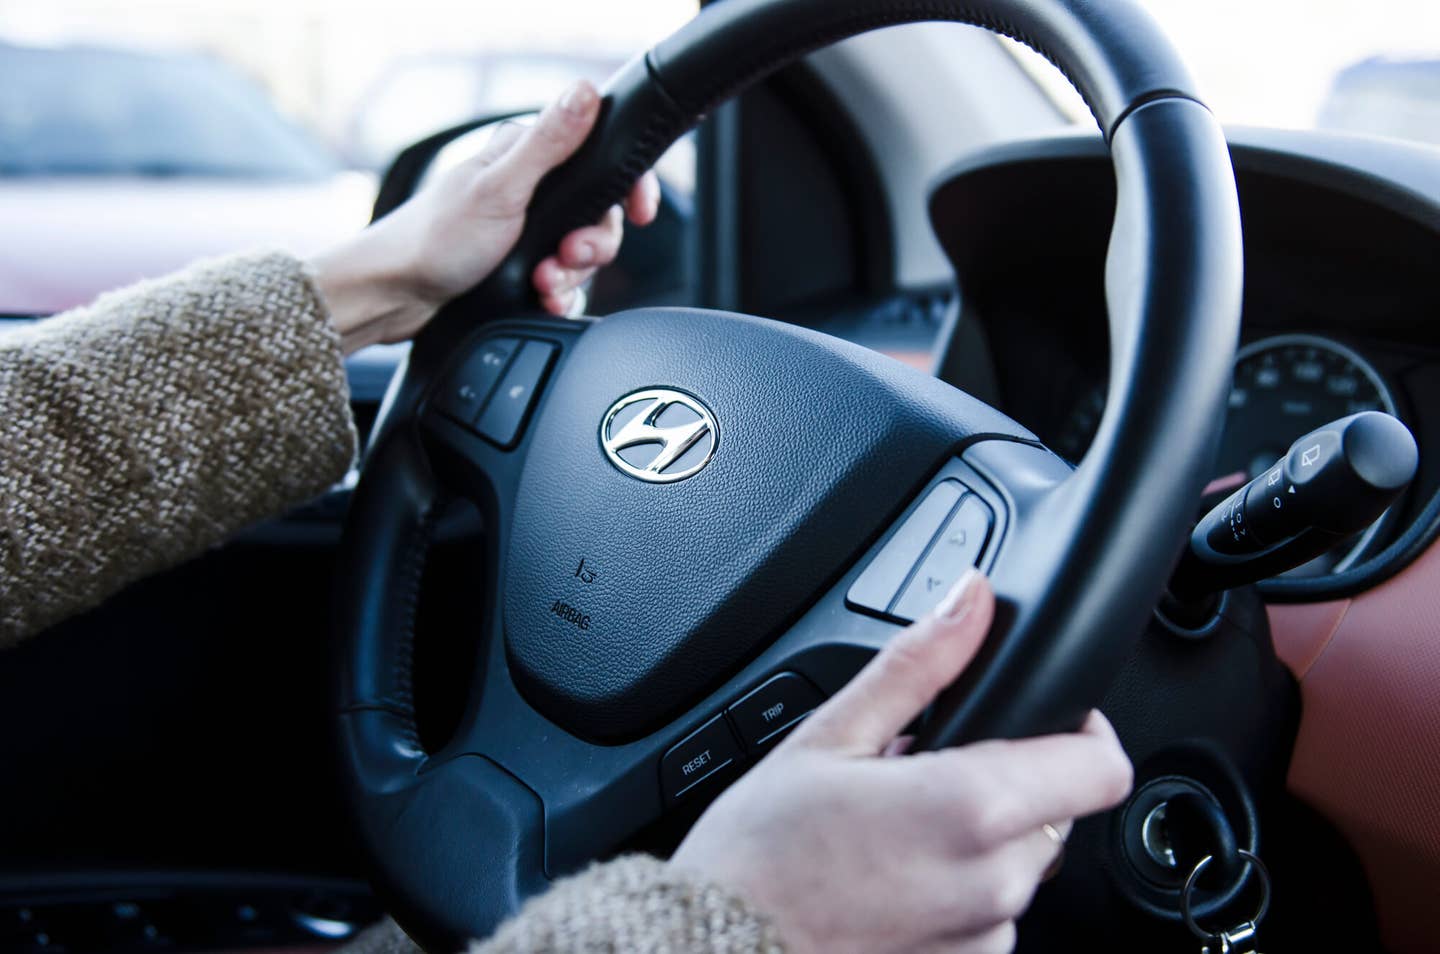 Hands holding steering wheel in hyundai car